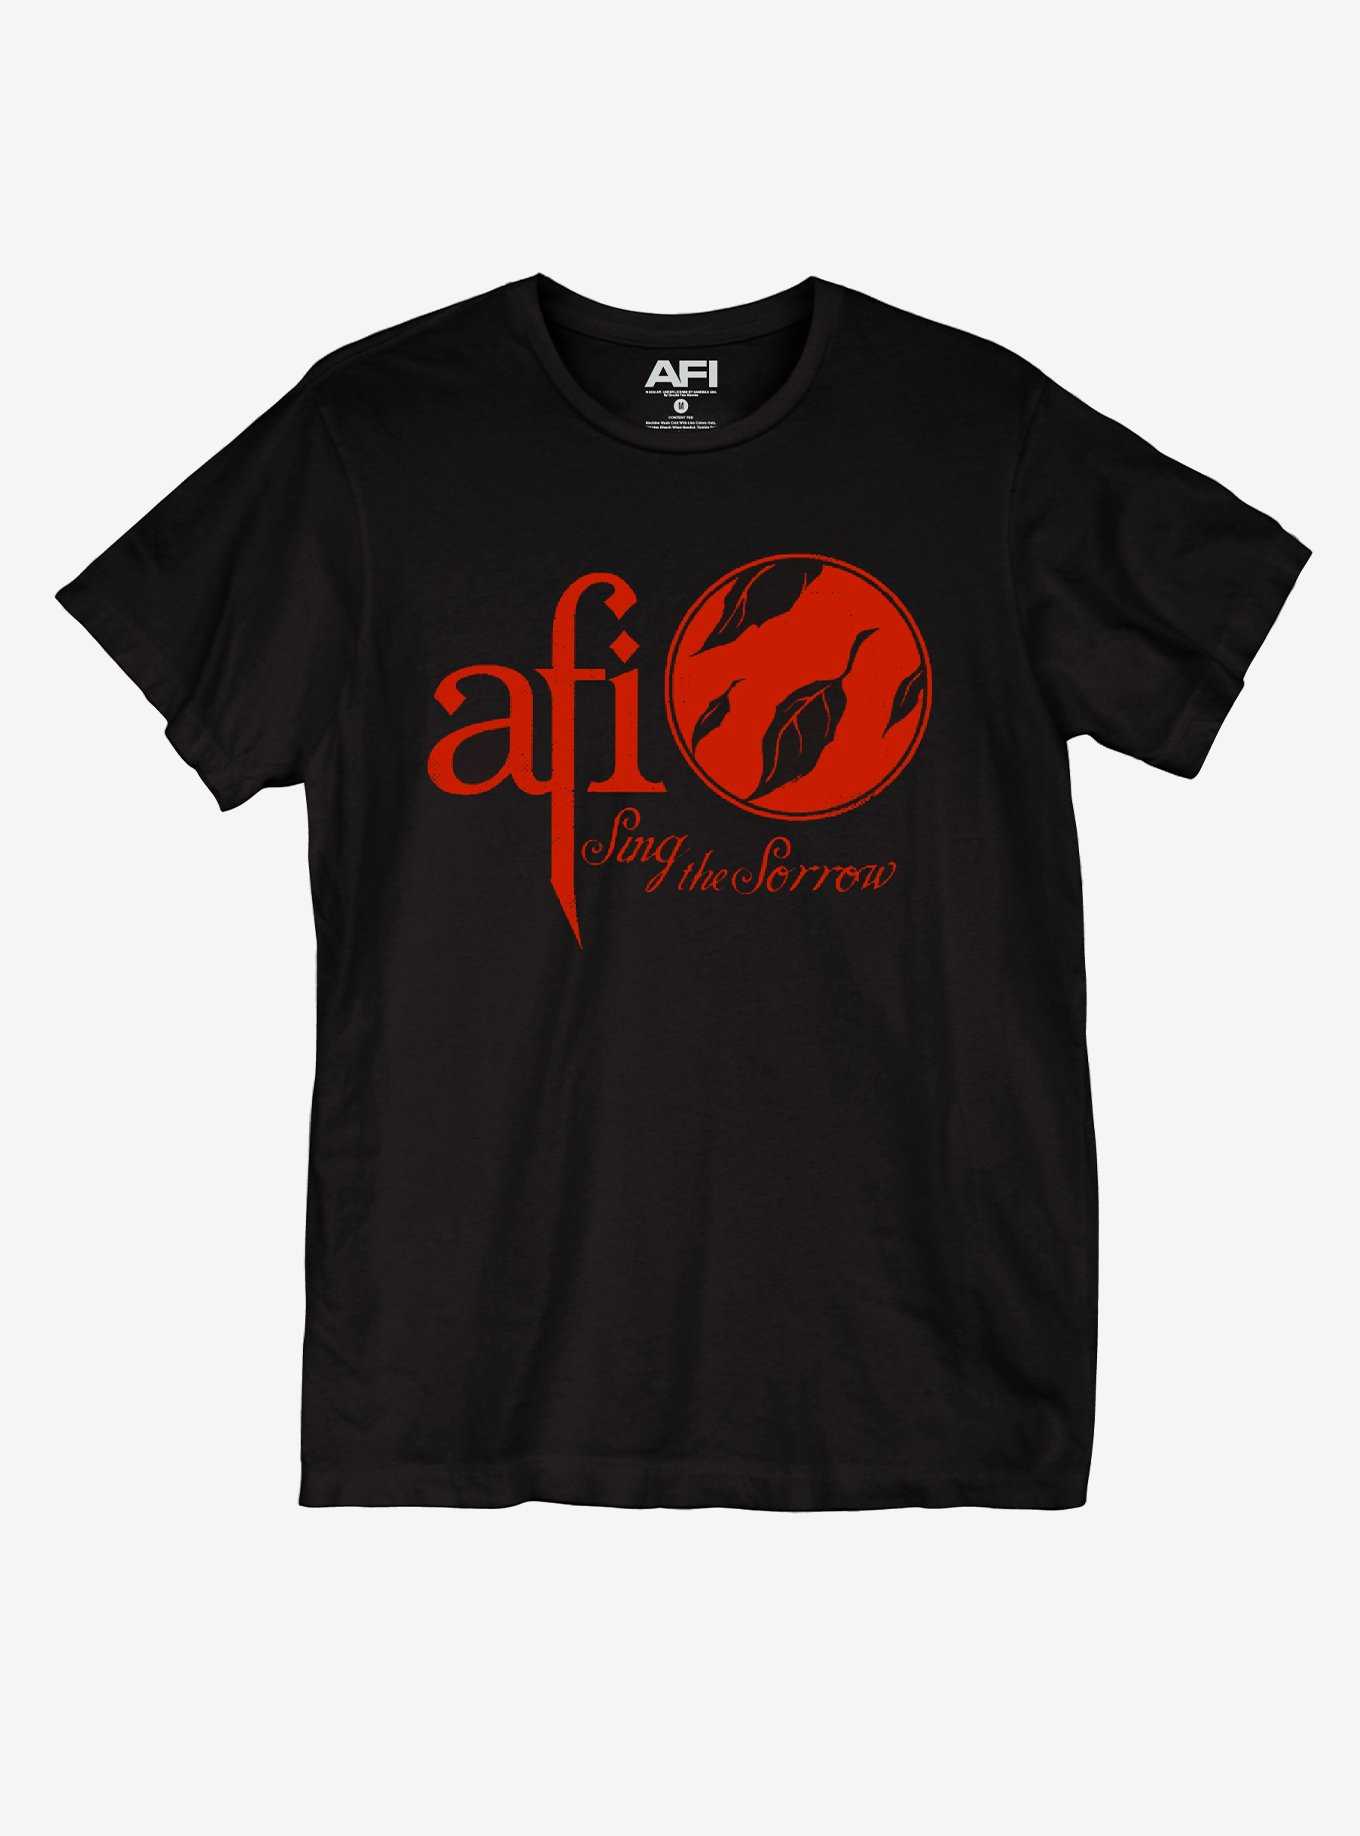 AFI Sing The Sorrow T-Shirt, , hi-res